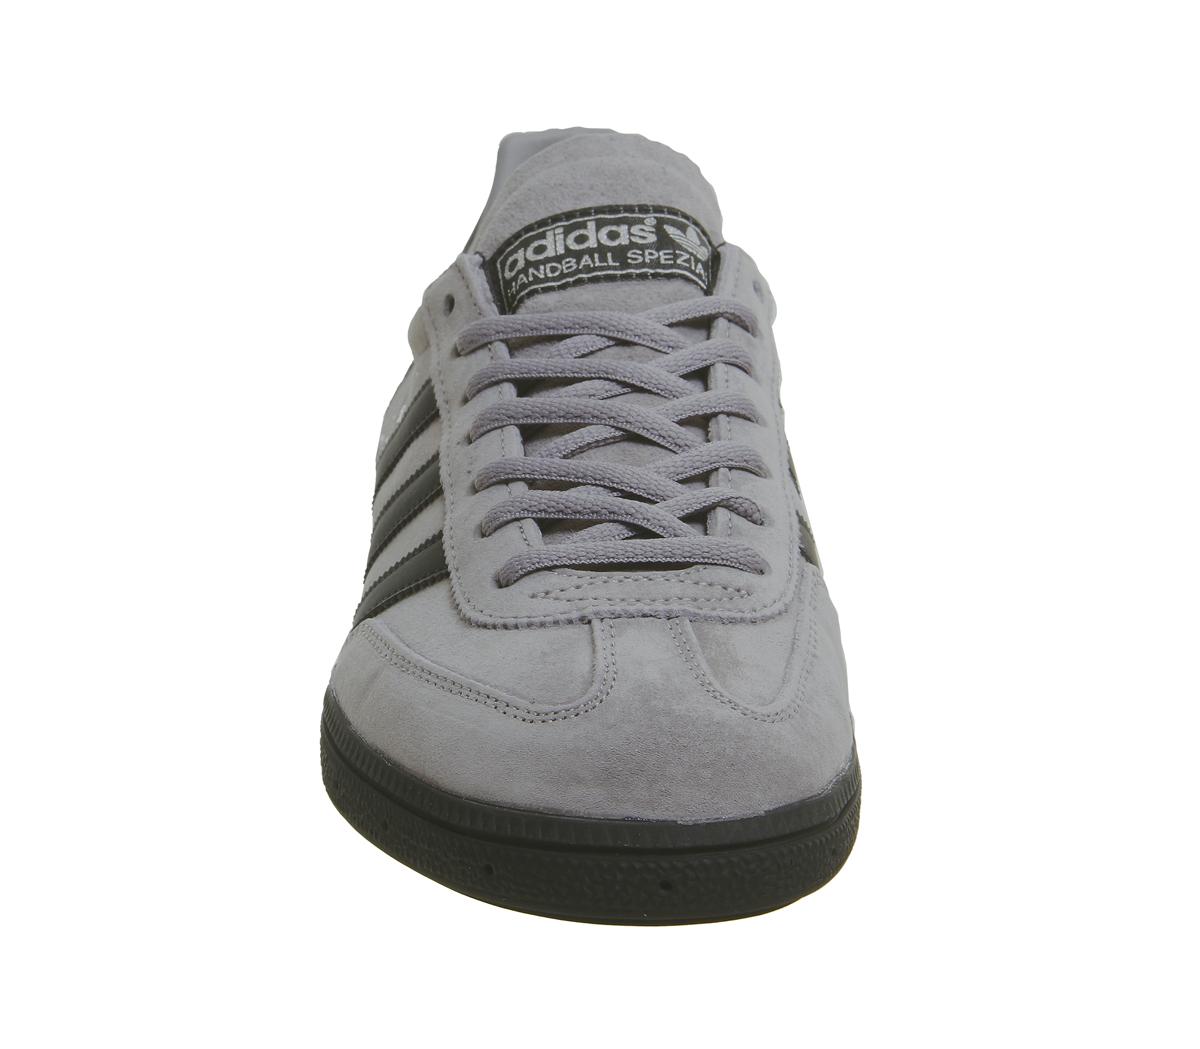 adidas spezial solid grey